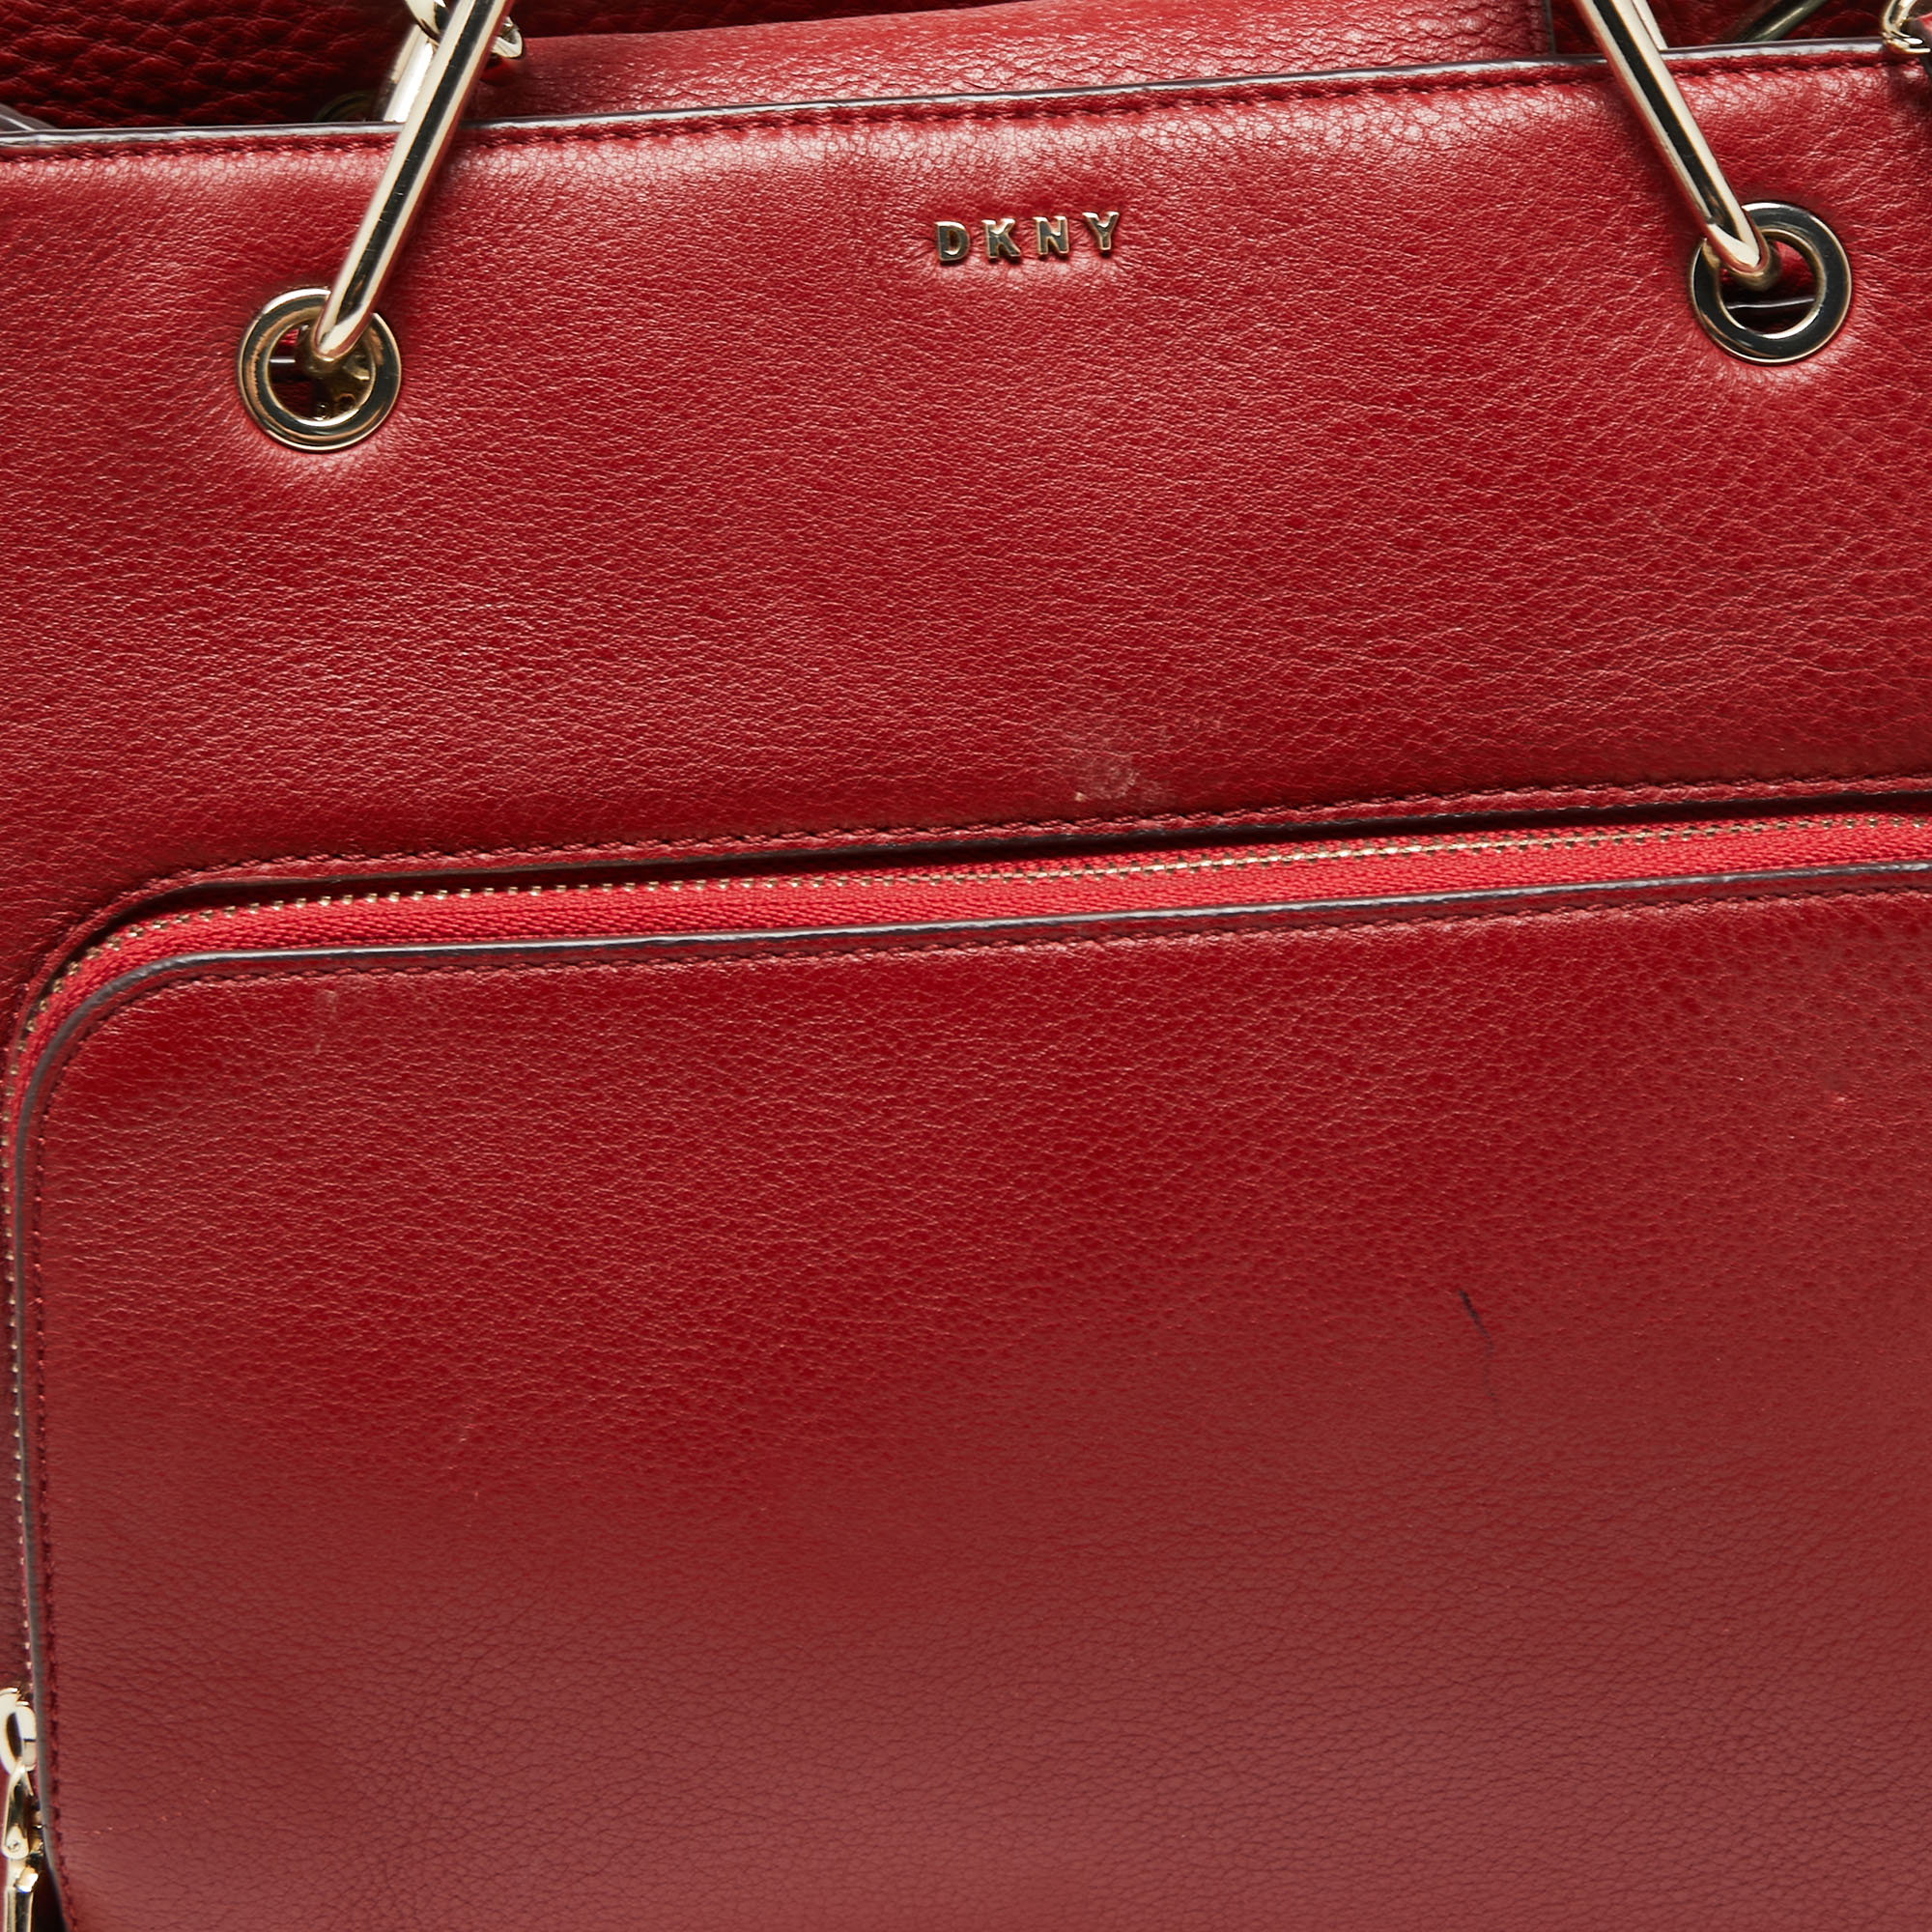 DKNY Red Leather Bryant Park Front Pocket Satchel